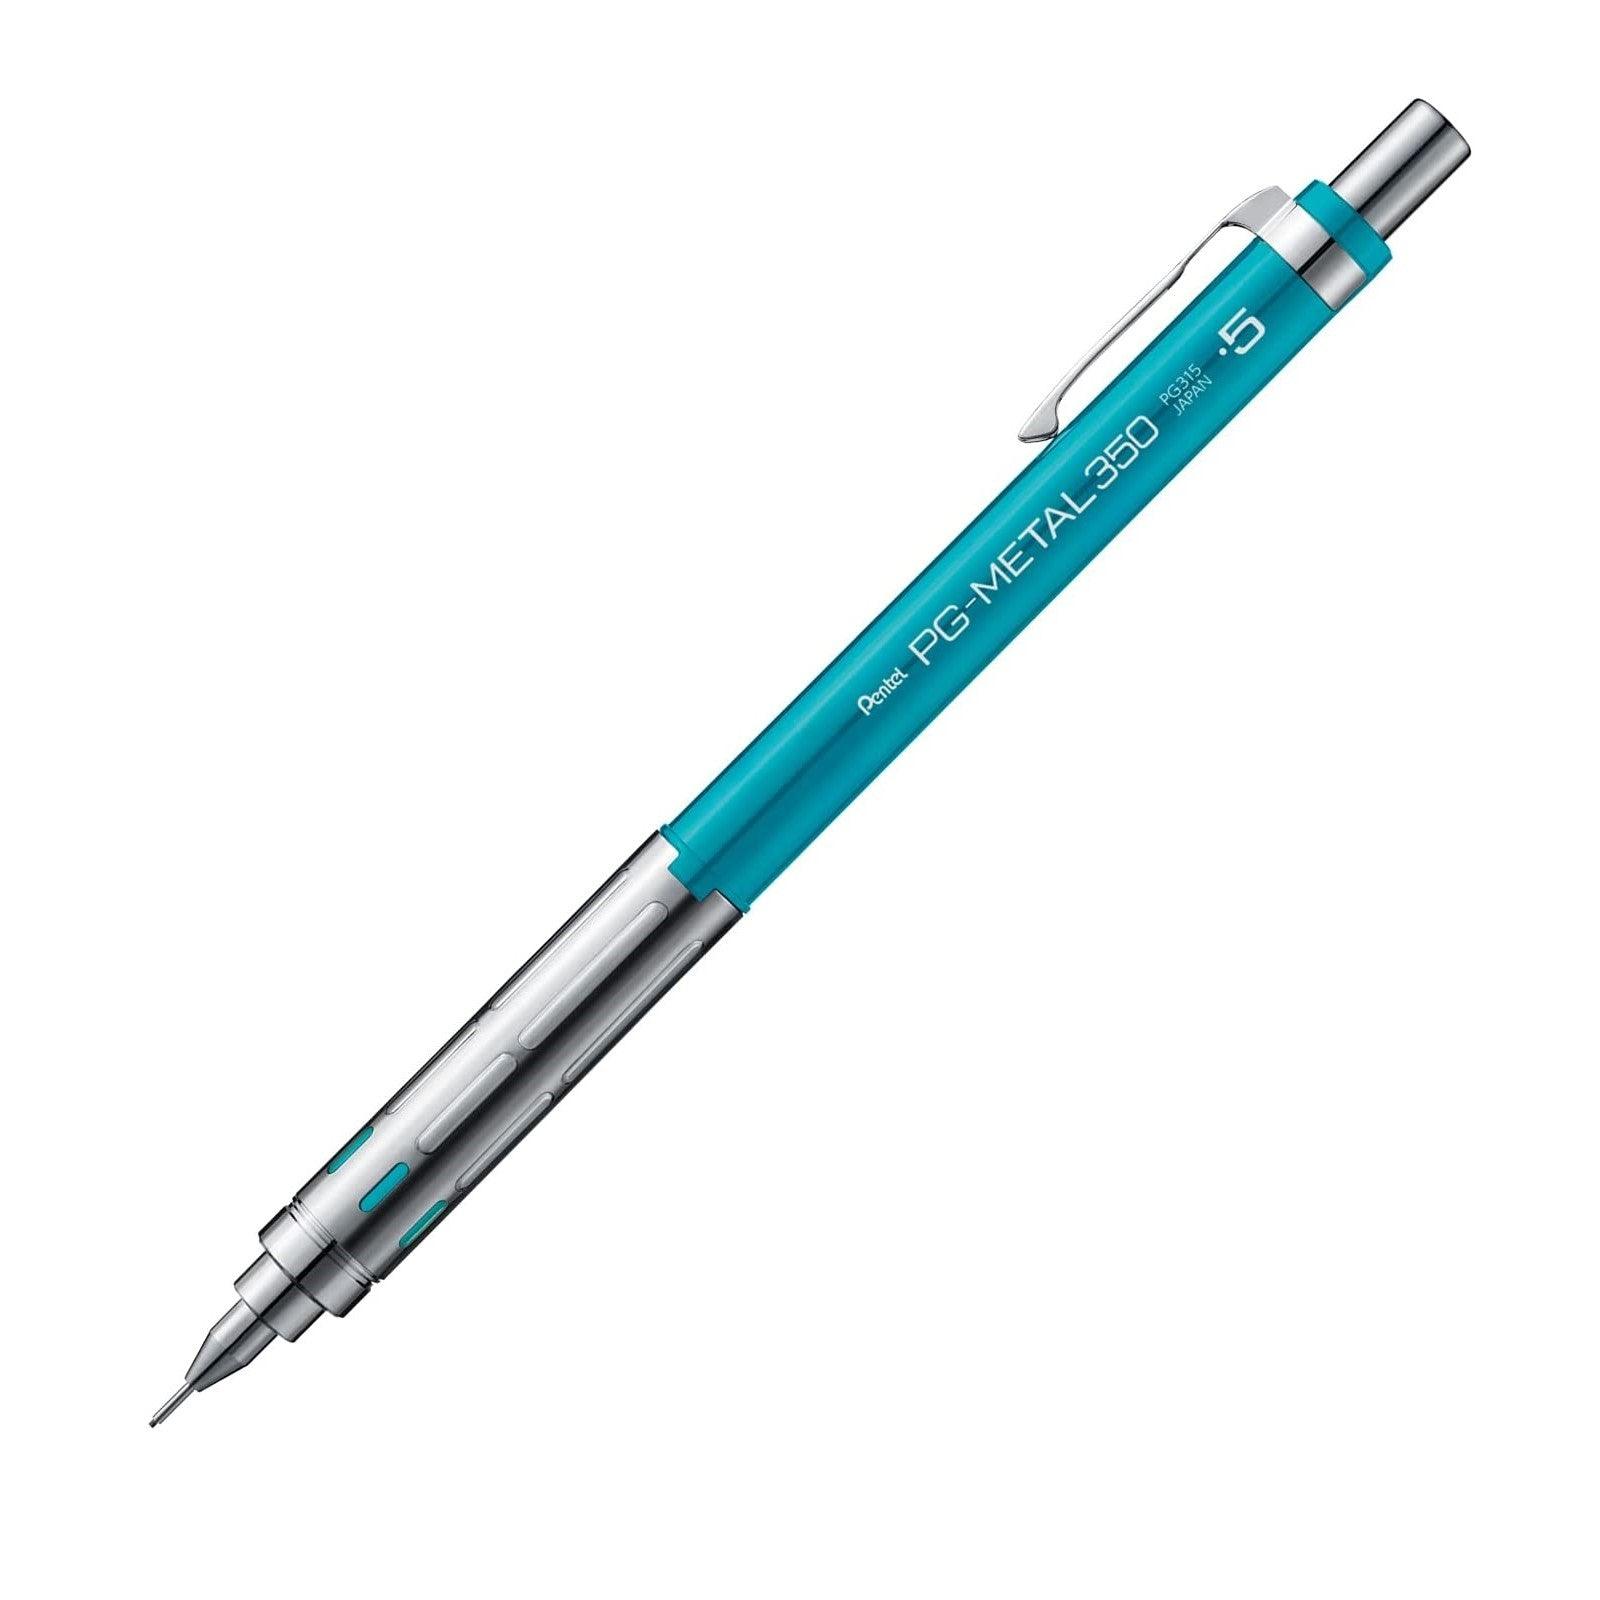 (Pre-Order) PENTEL PG-METAL350 0.5mm mechanical pencil for drafting PG315 Z2-1N - CHL-STORE 